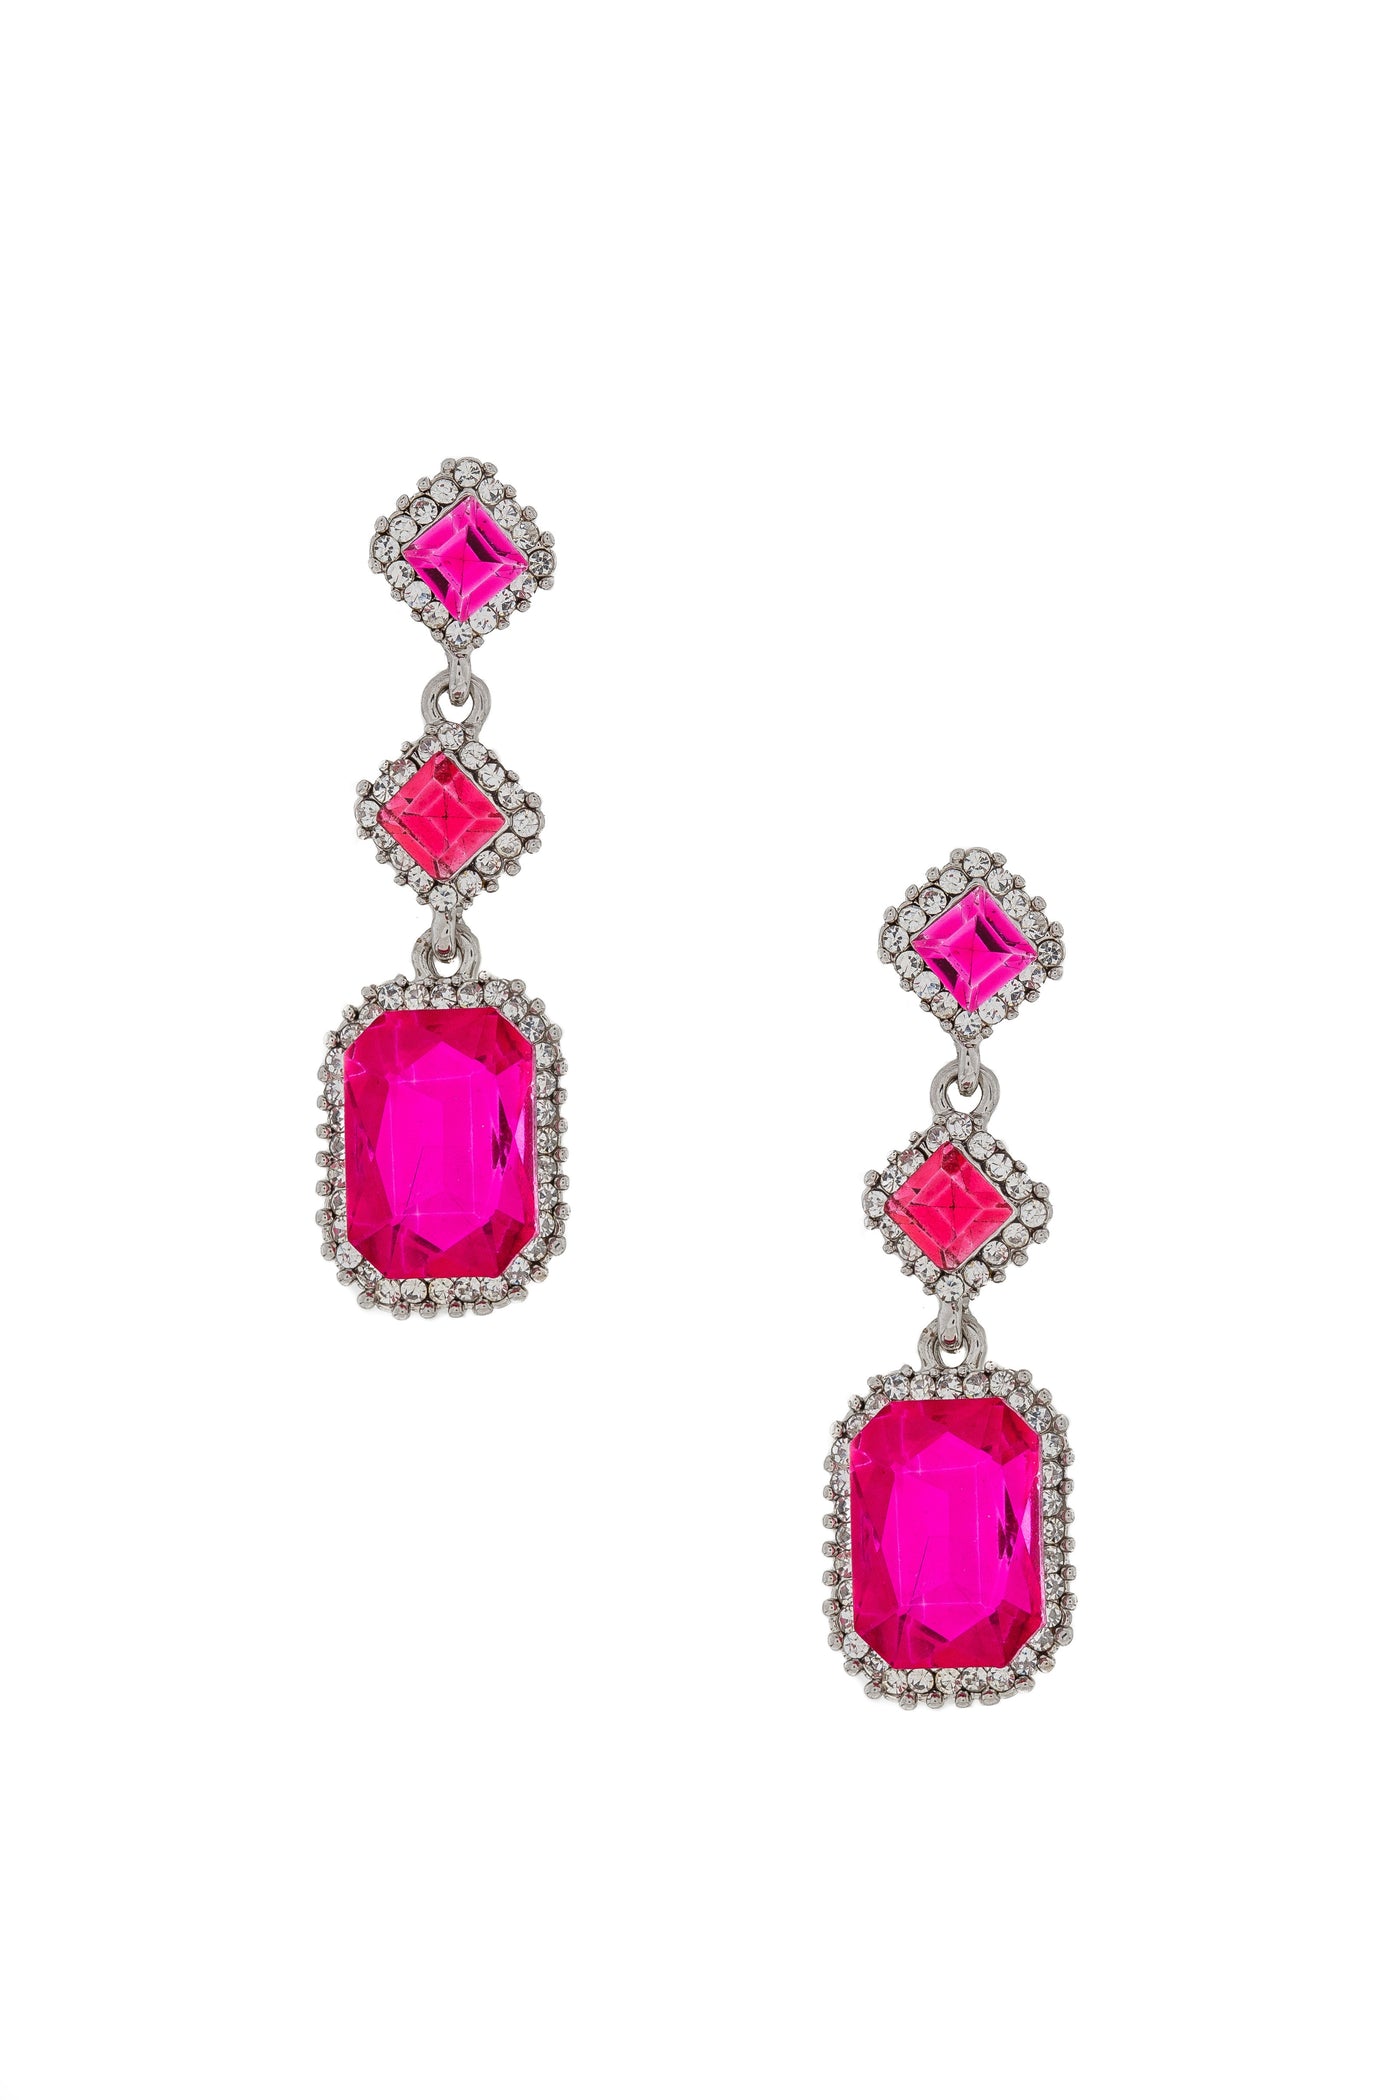 Diamante Chandelier Earrings in Pink - SOLD OUT